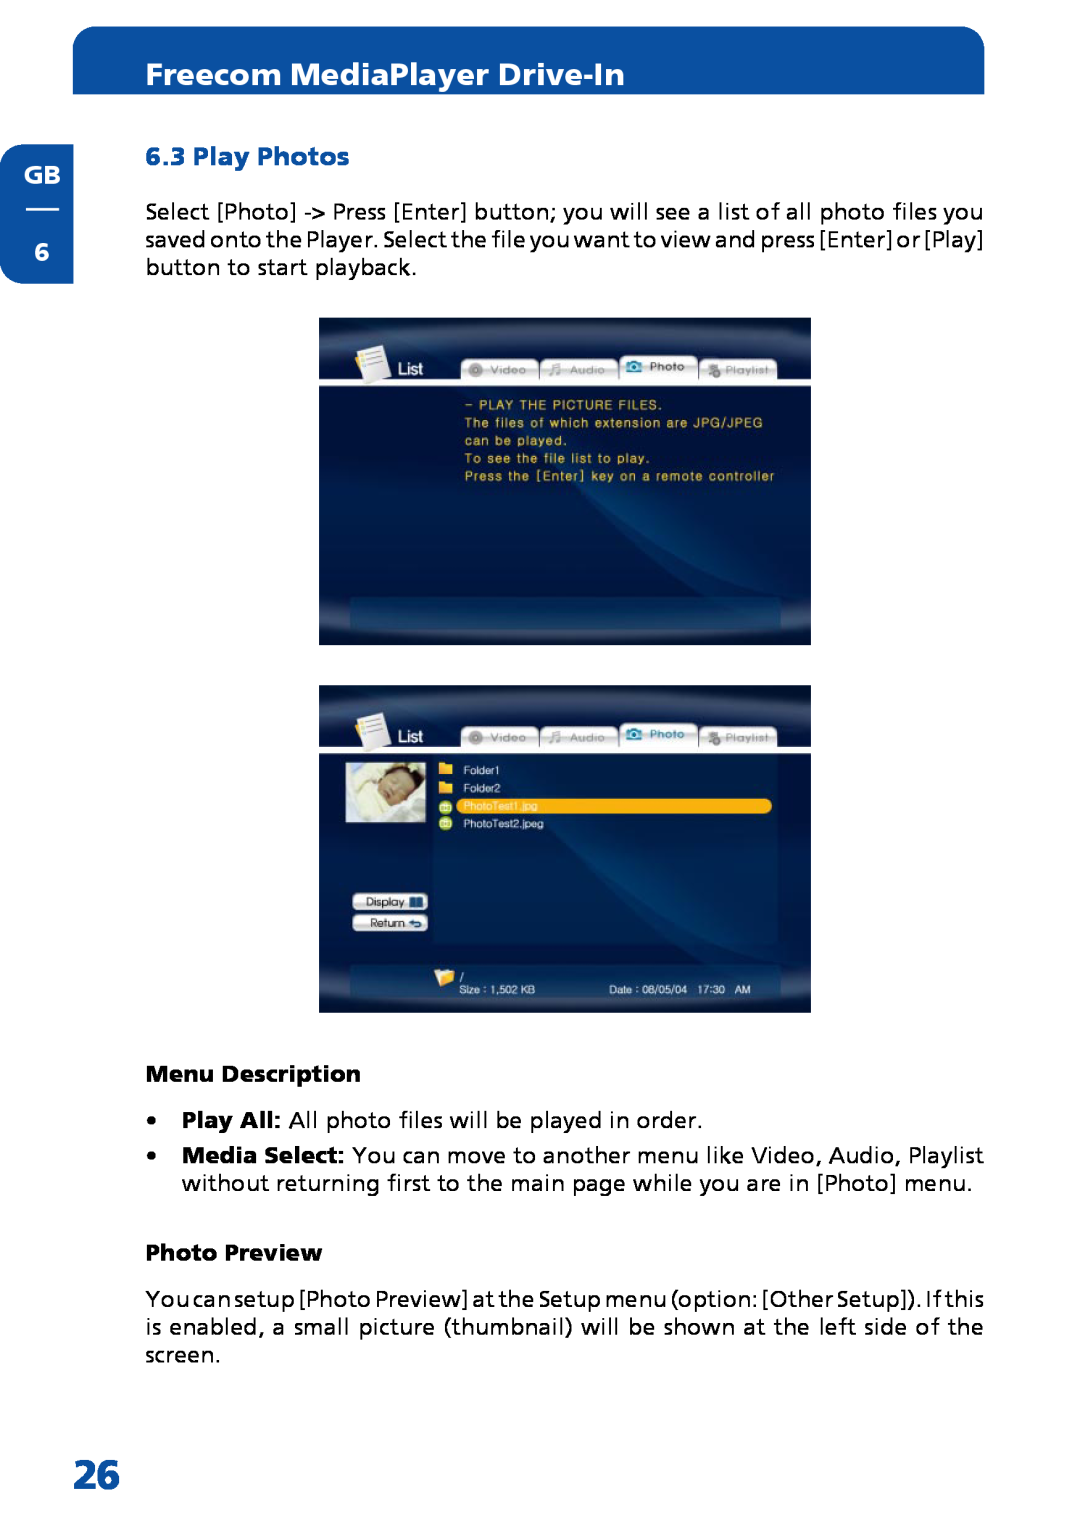 Freecom Technologies Multimedia Player manual Play Photos, Freecom MediaPlayer Drive-In, Menu Description, Photo Preview 